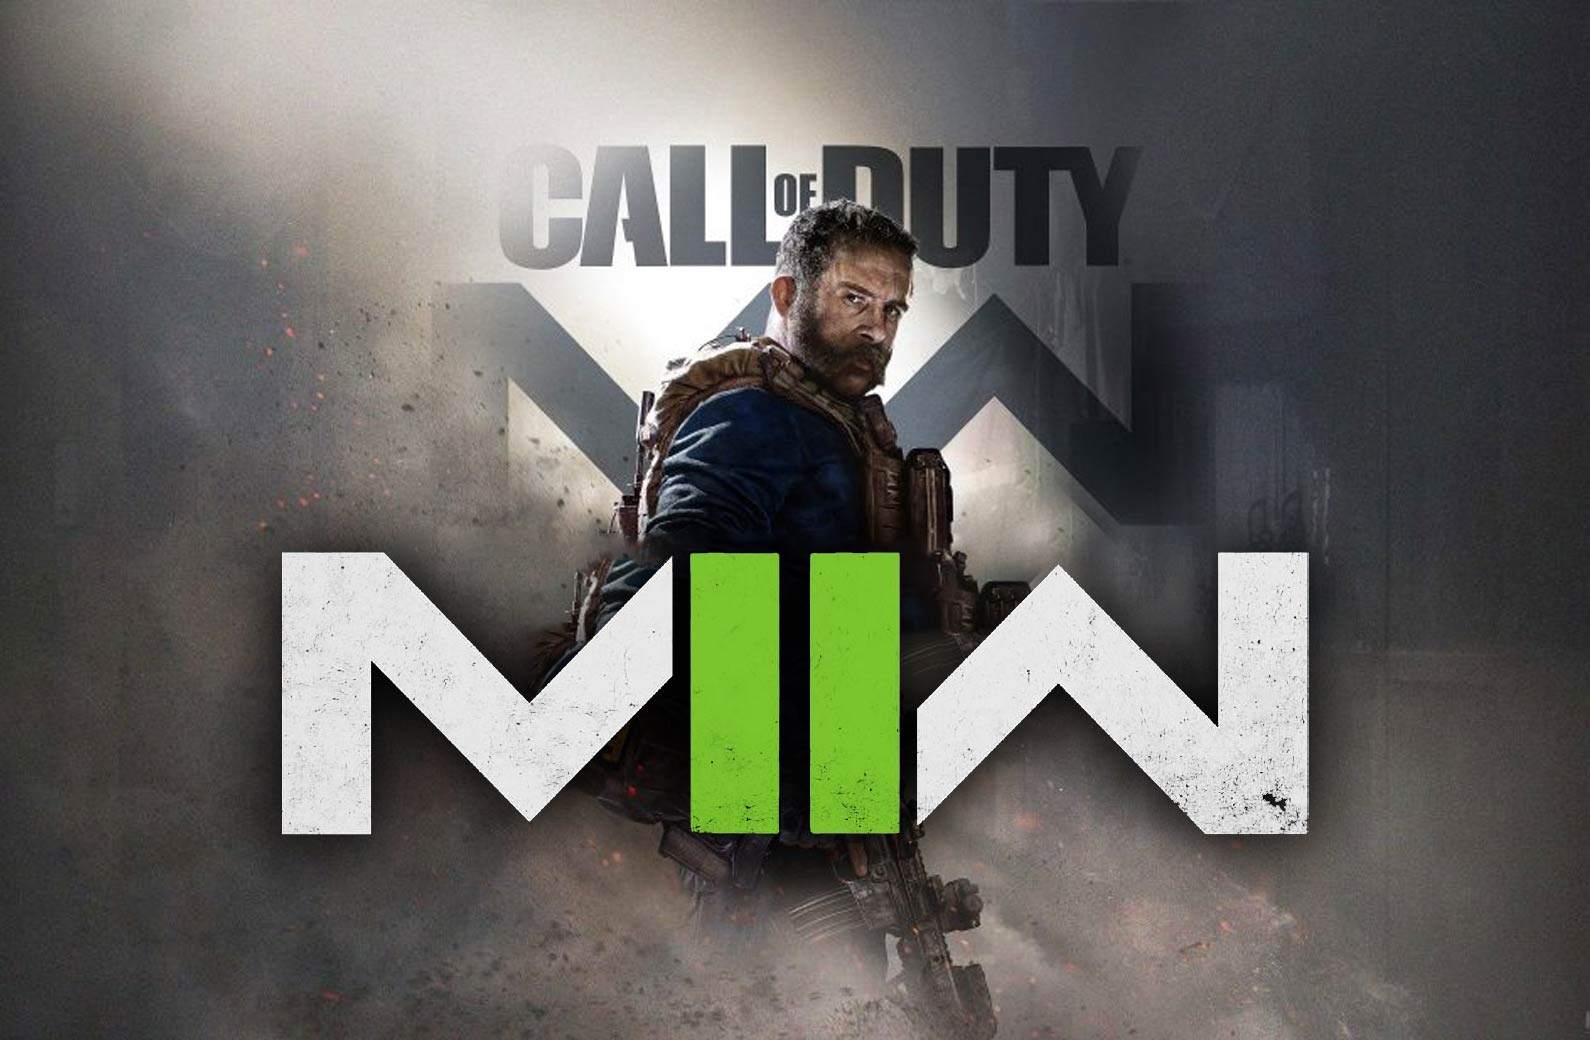 Call of Duty 4: Modern Warfare - Metacritic